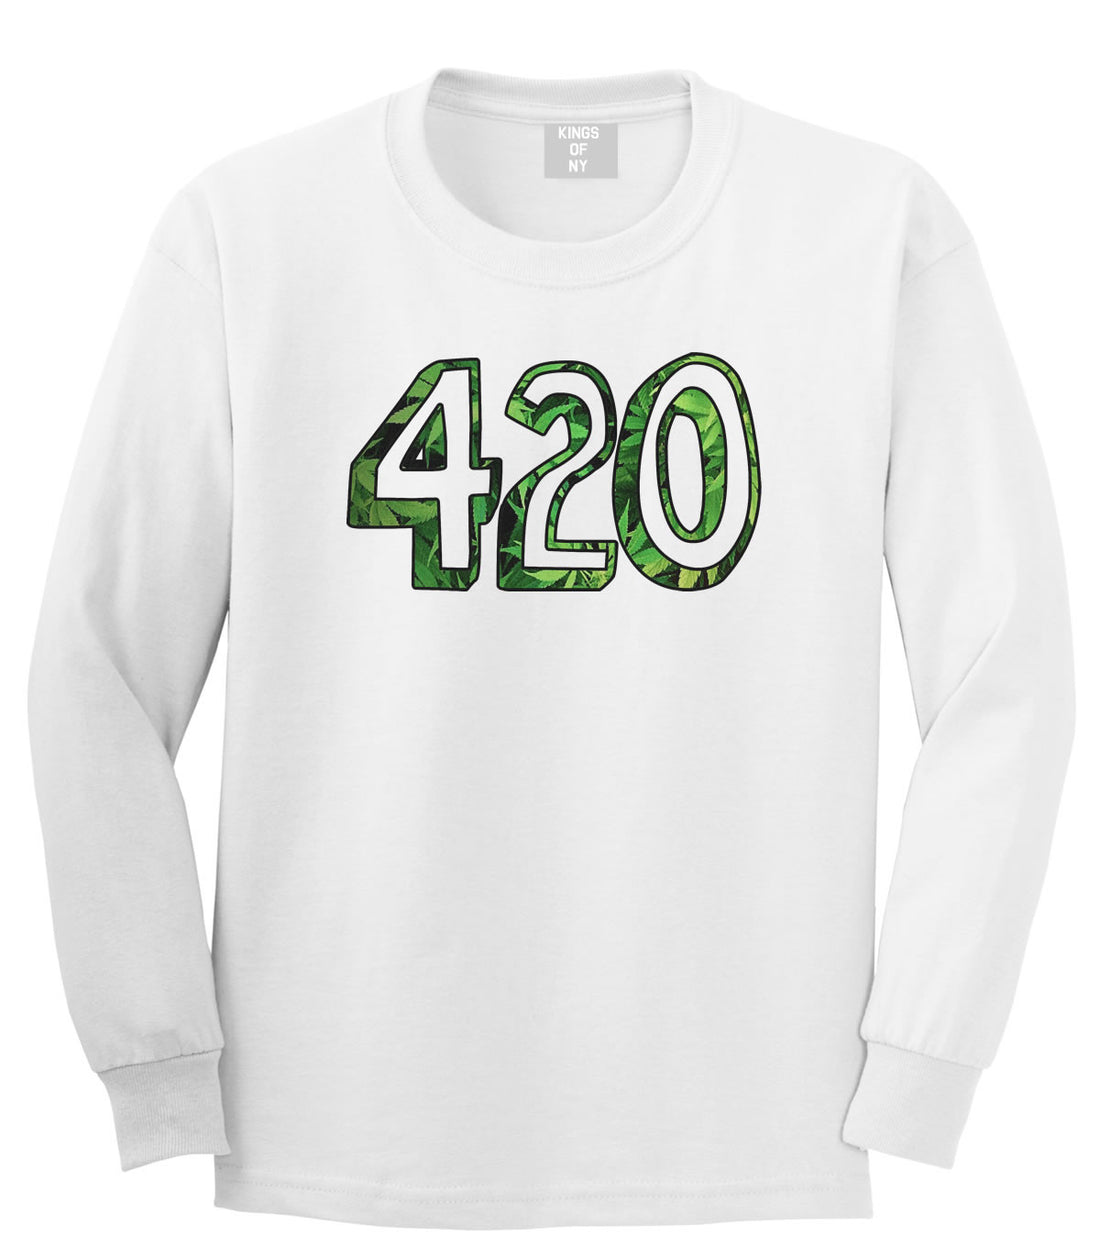  420 Weed Marijuana Print Boys Kids Long Sleeve T-Shirt in White by Kings Of NY